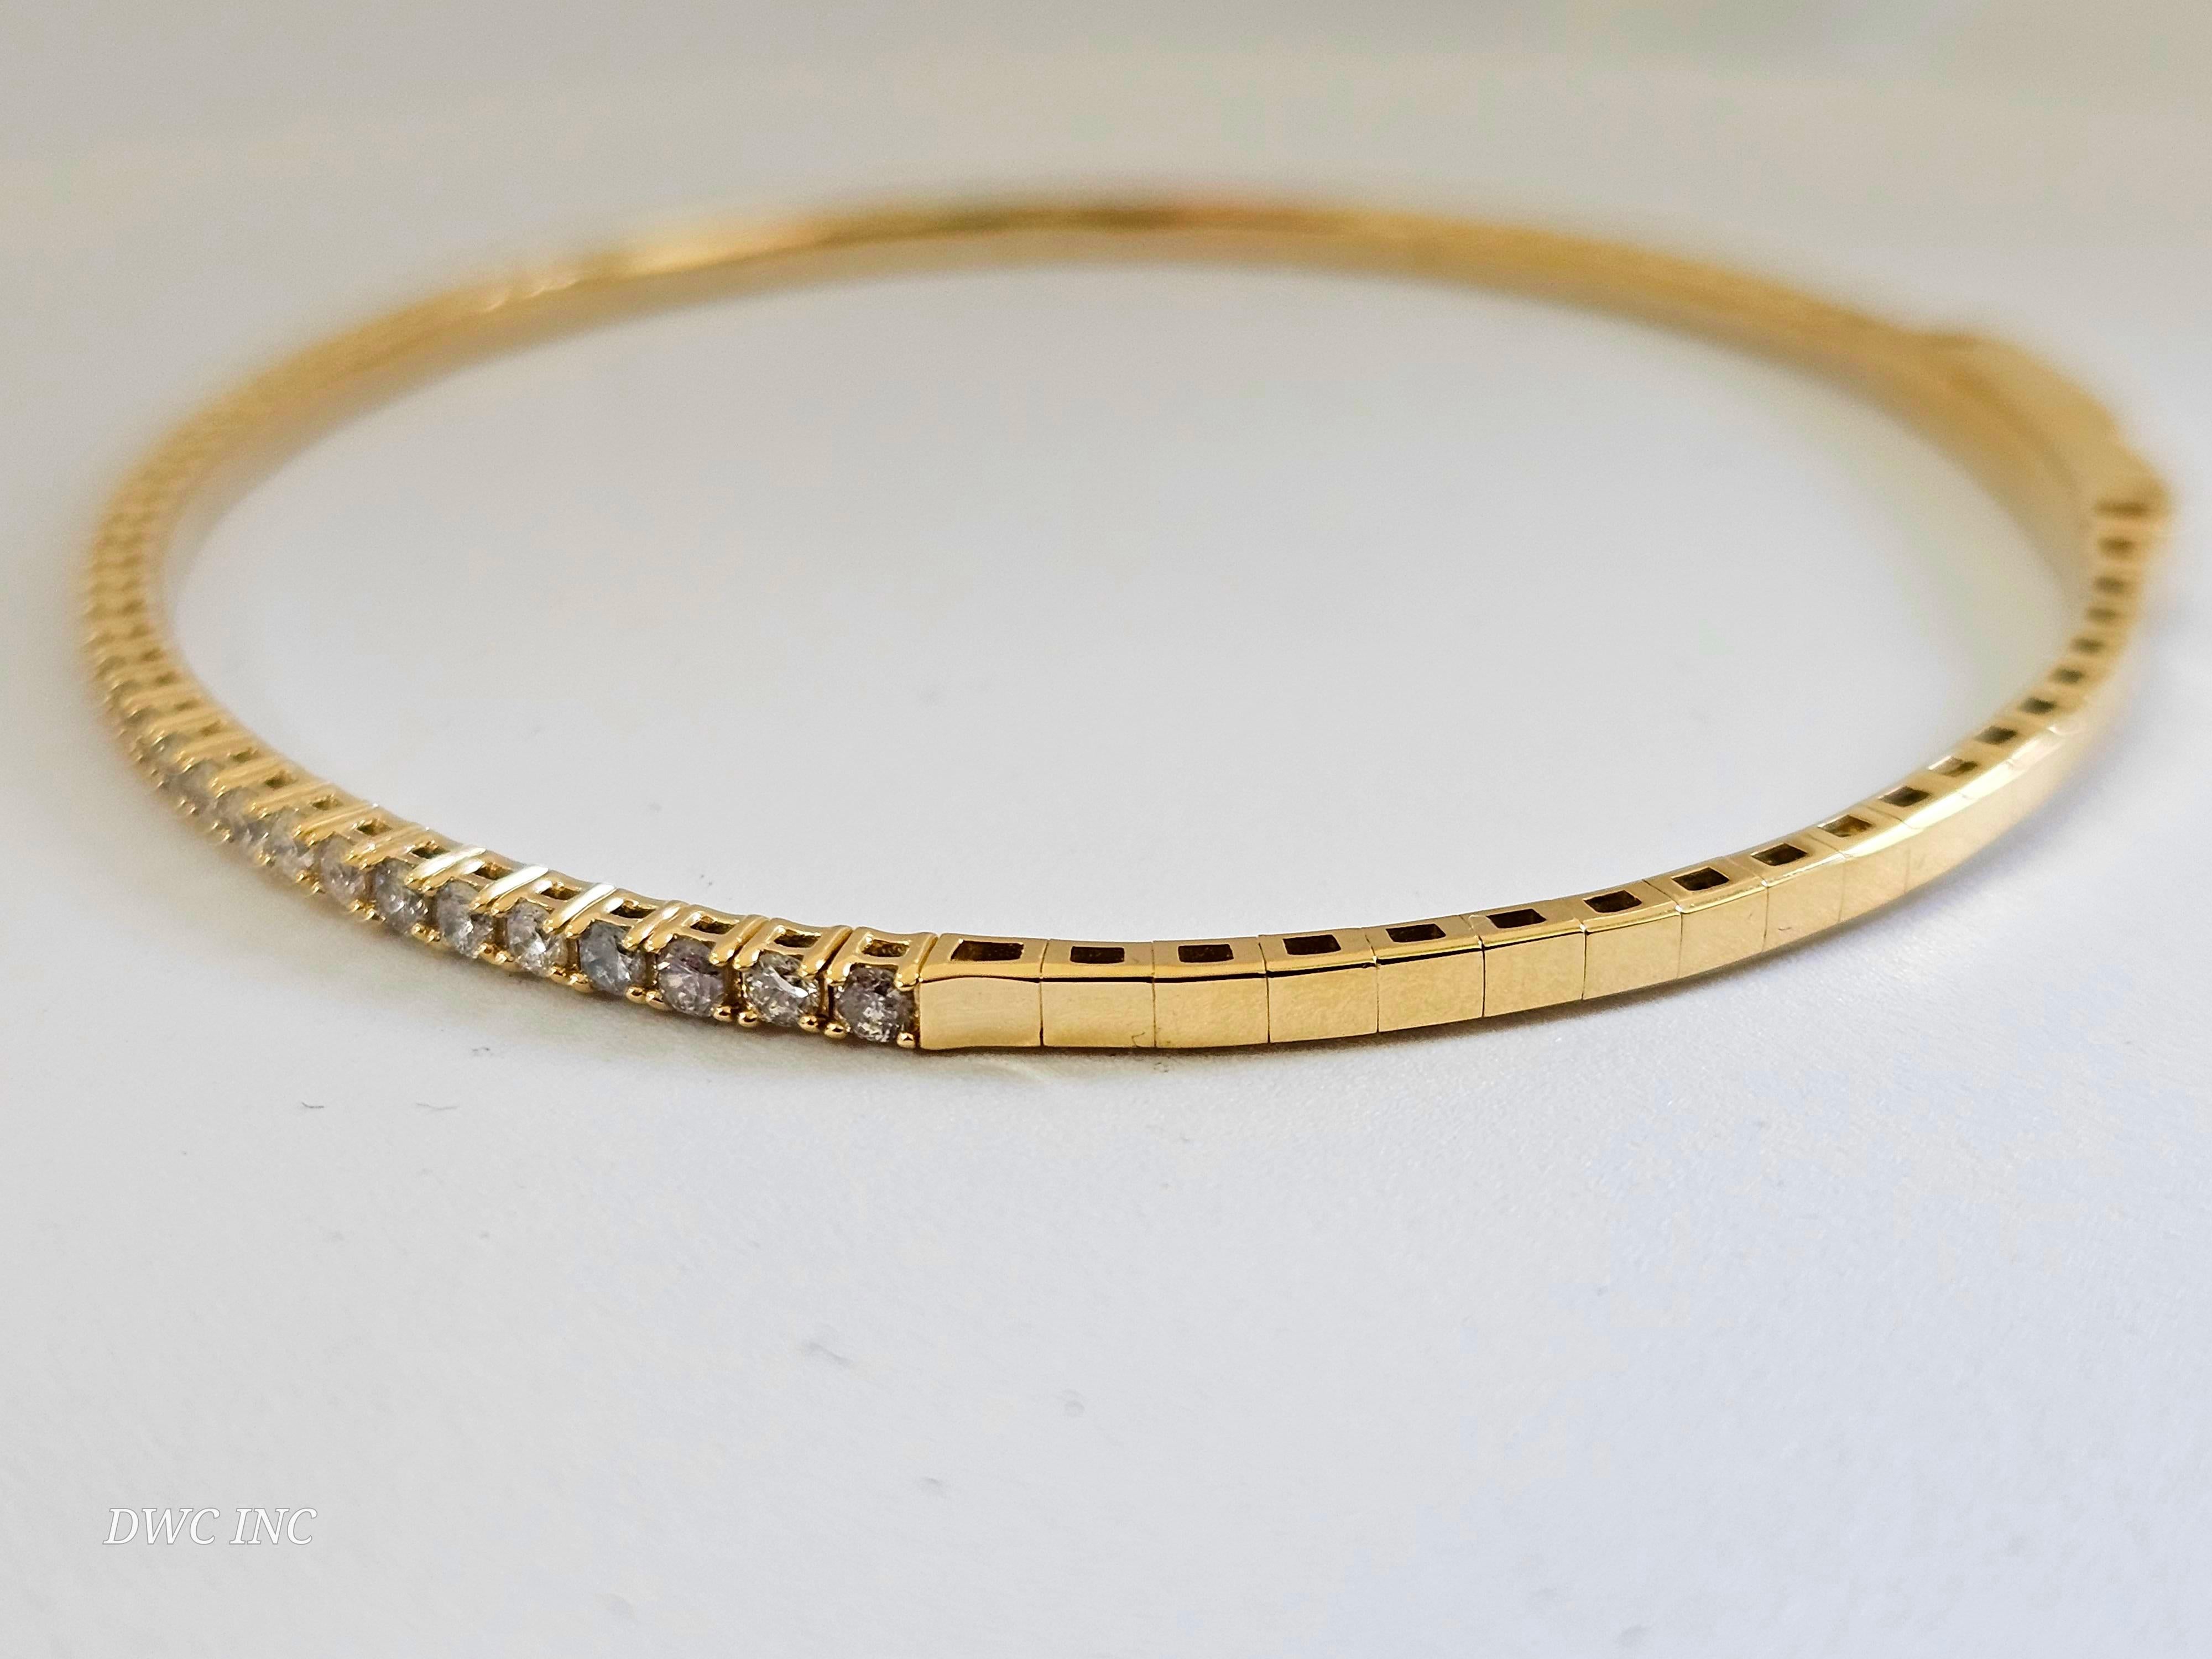  0.83 Carat Round Brilliant Cut Diamond Mini bangle Bracelet 14 Karat Yellow Gold Unisexe 